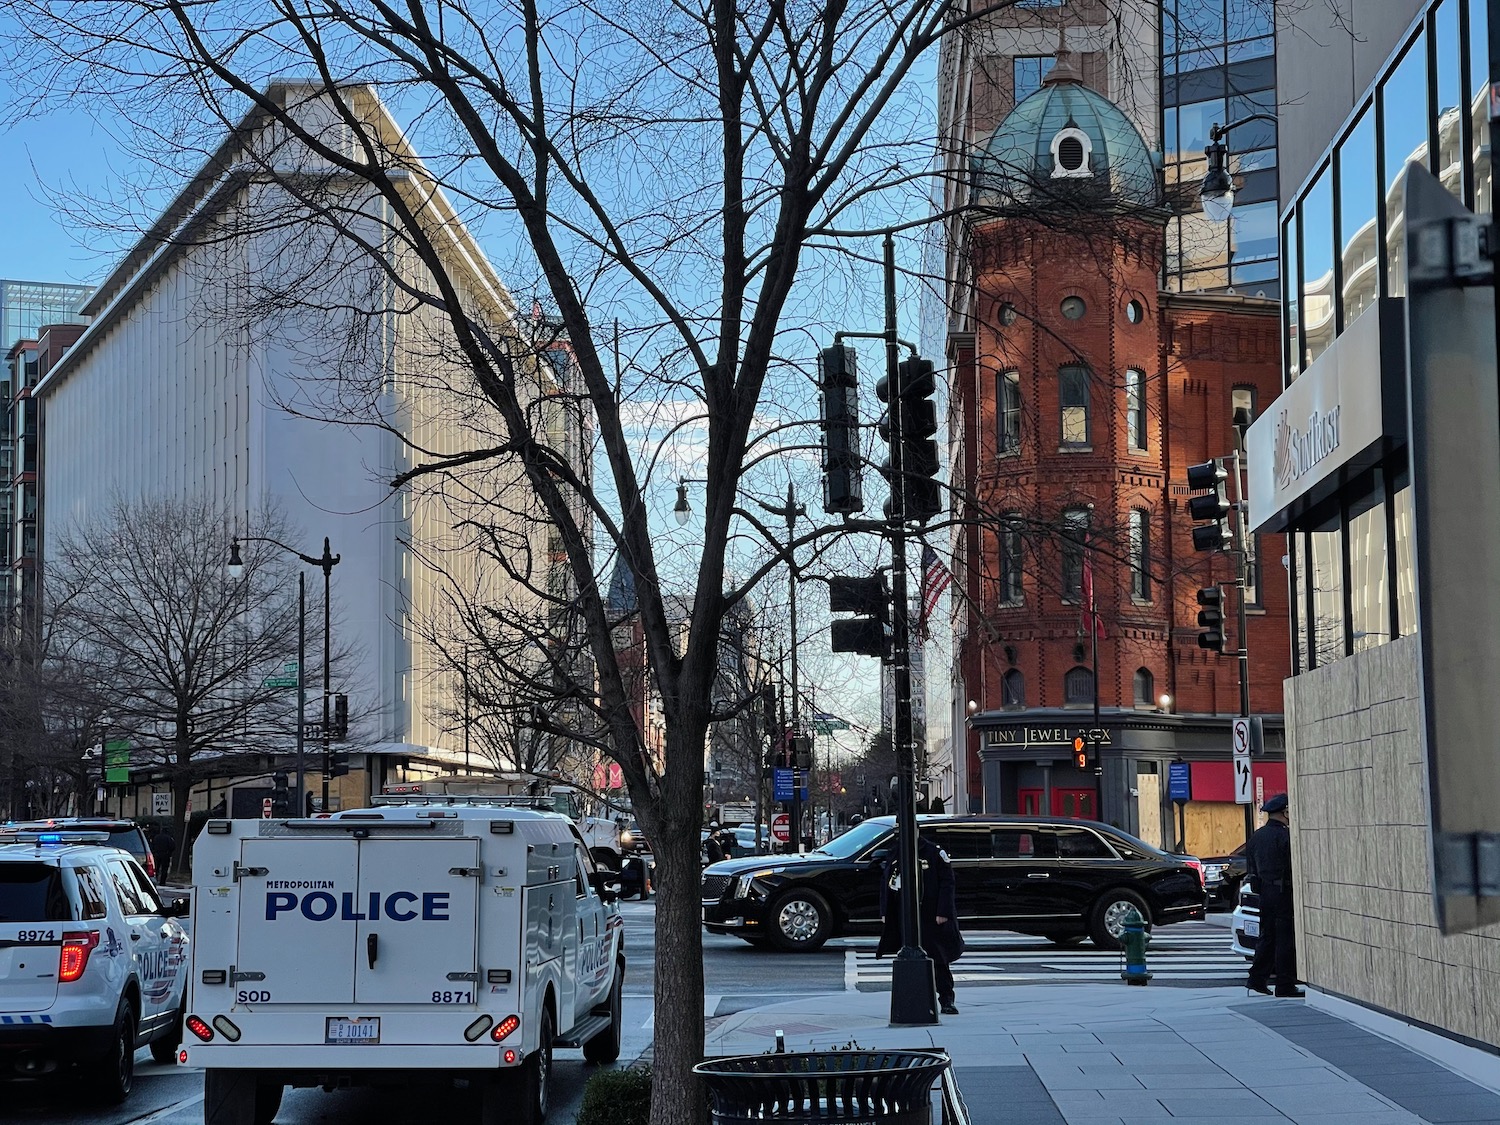 a police van on a city street